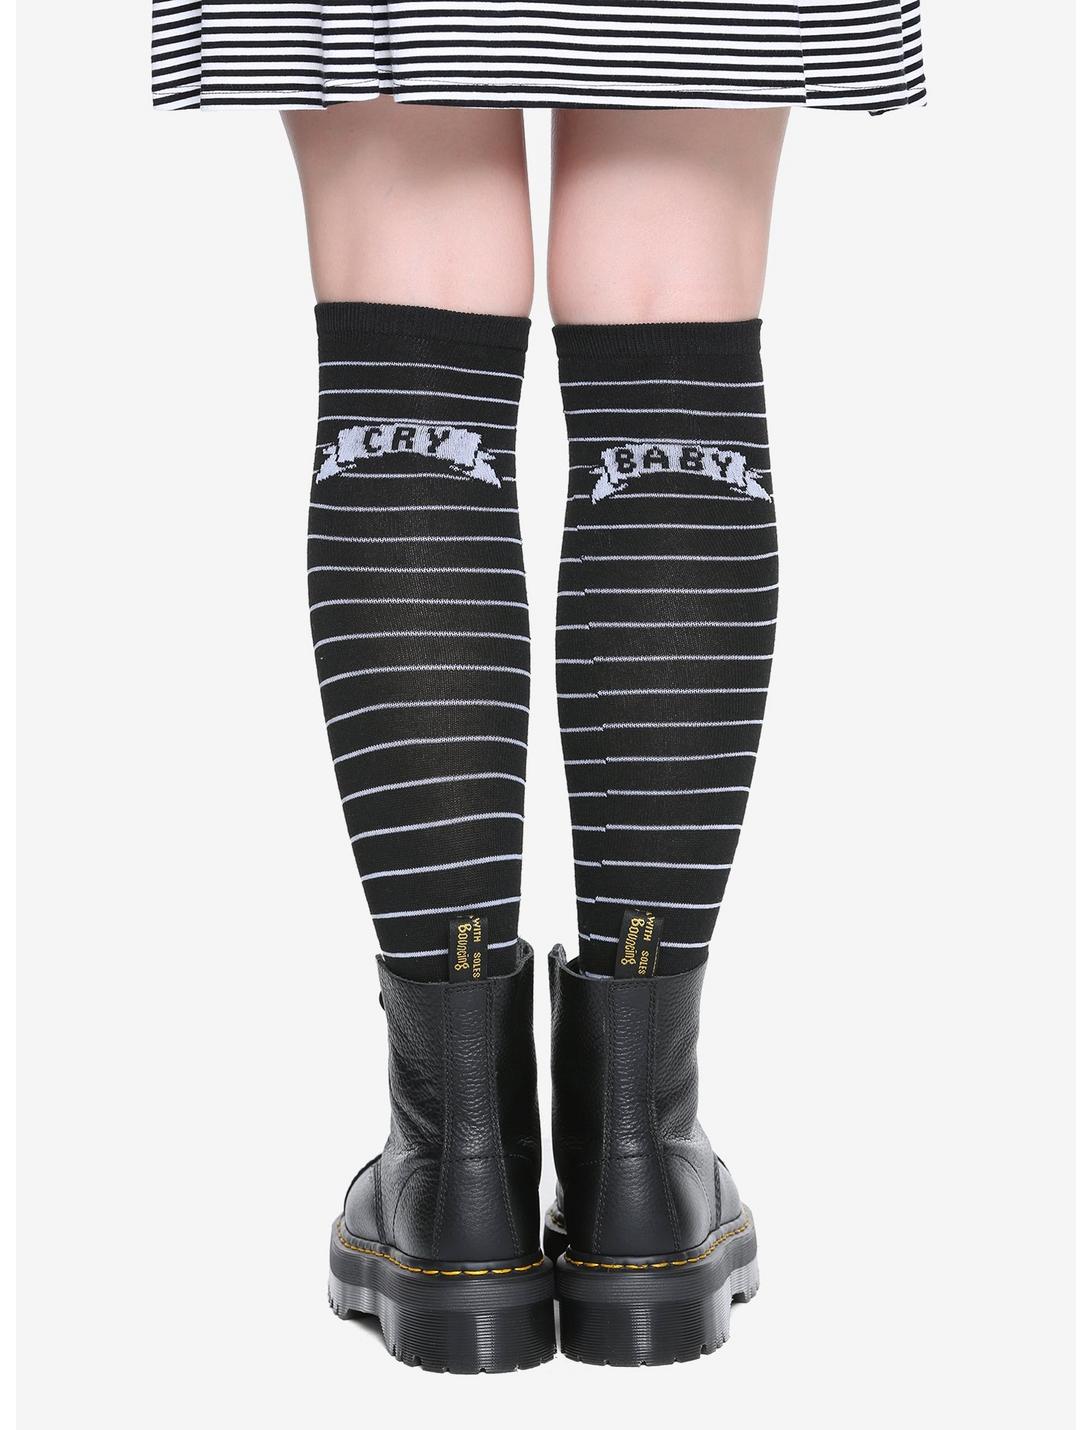 Black & White Striped Cry Baby Knee-High Socks, , hi-res